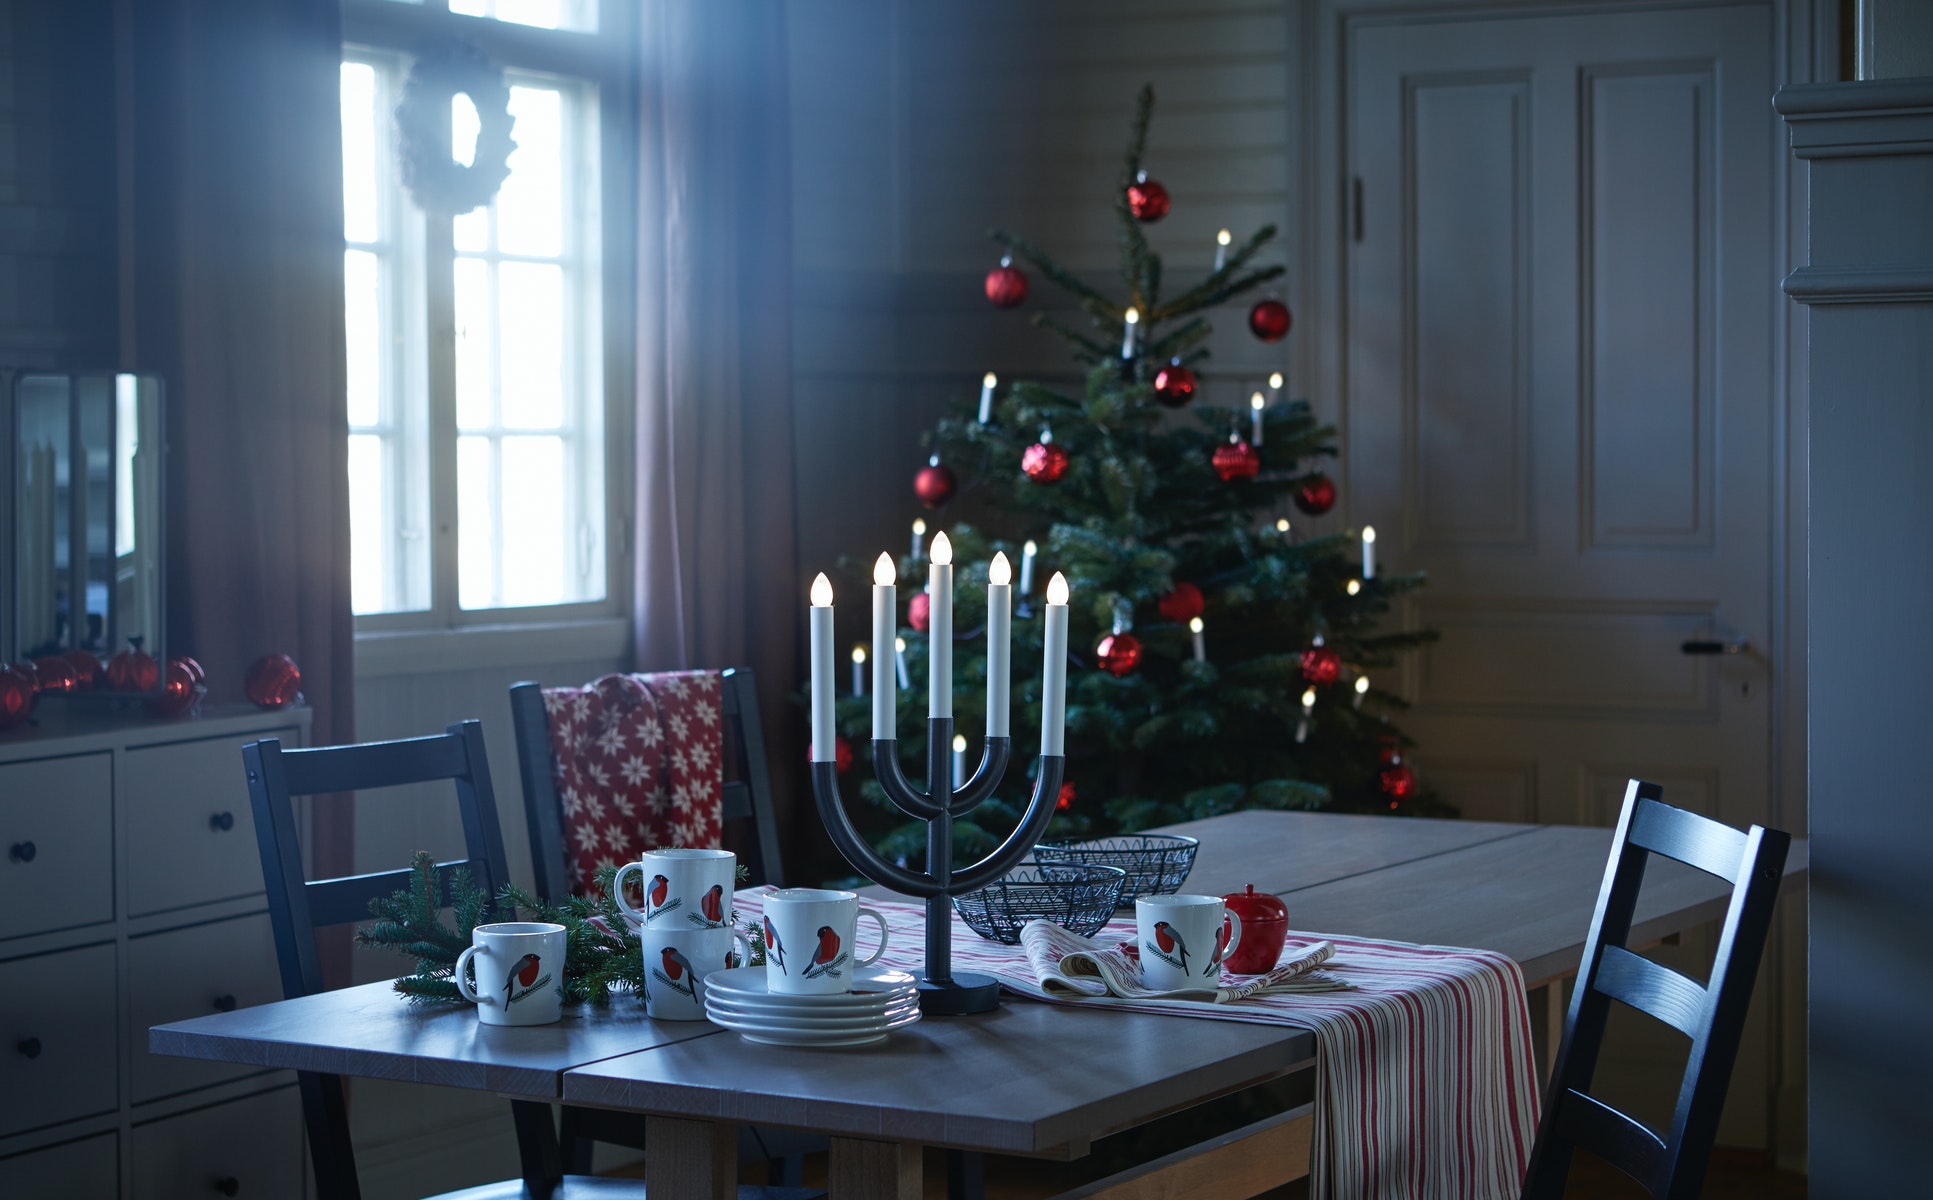 IKEA - The festive dining table